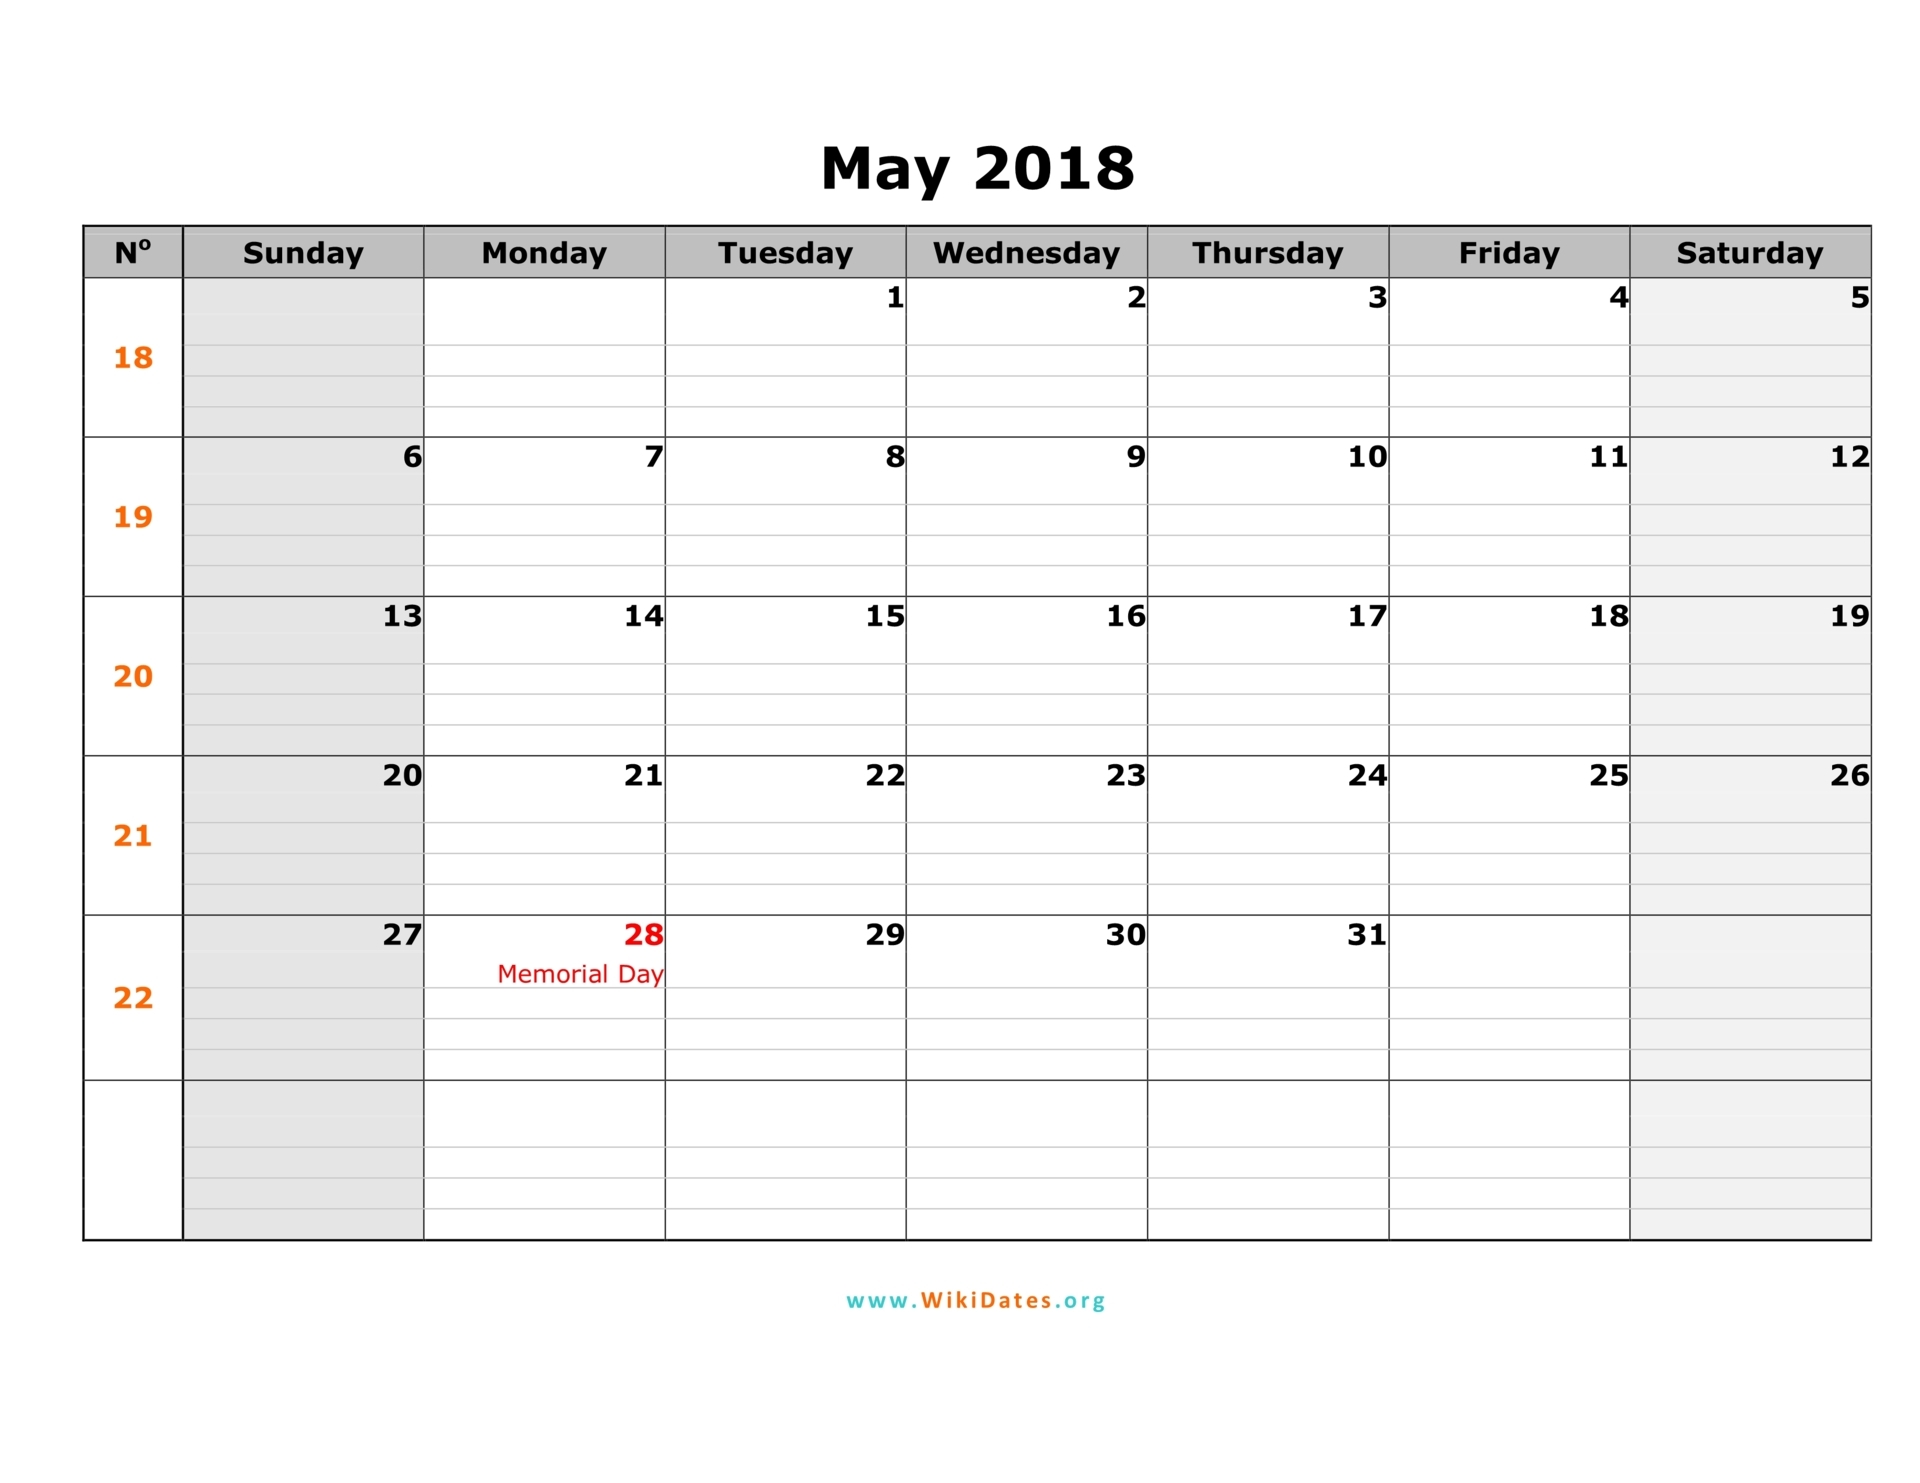 may-2018-calendar-wikidates